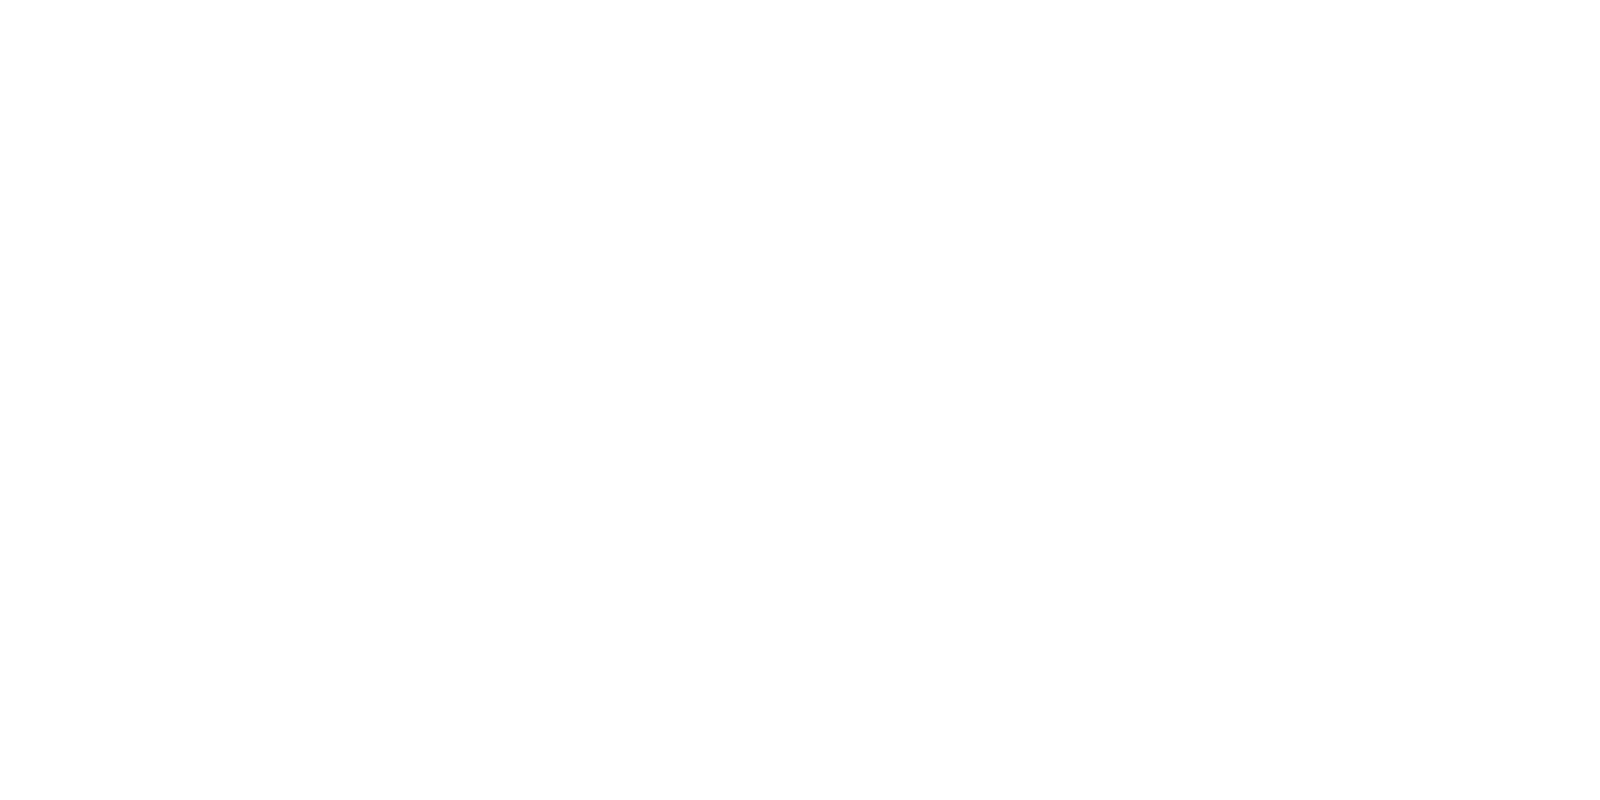 full metal jacket full movie with english subtitles